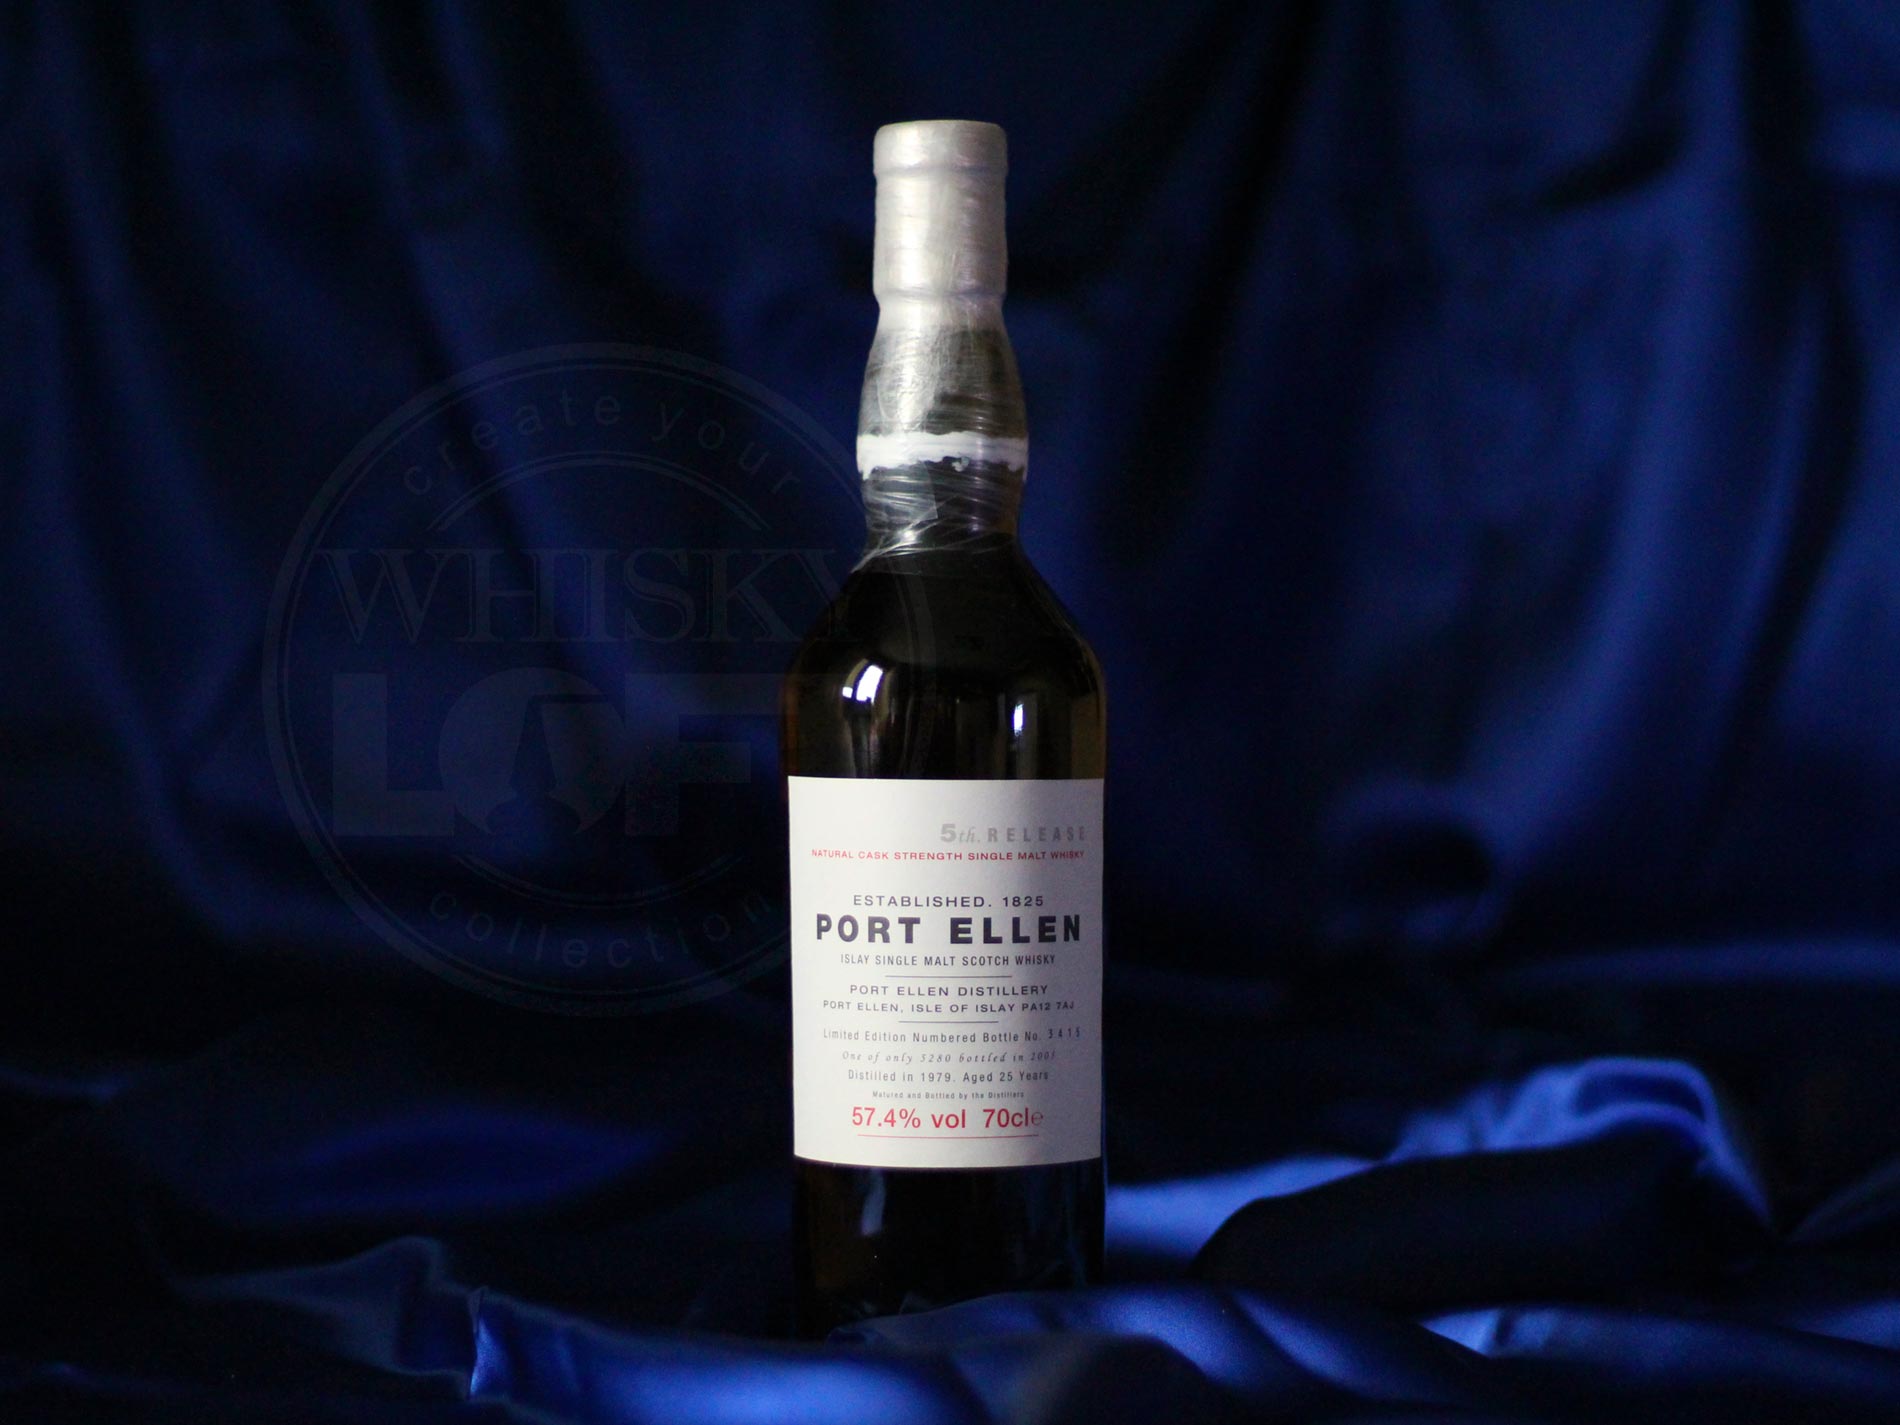 Single Malt Scotch Whisky, 1979 distilled, 25 years old.